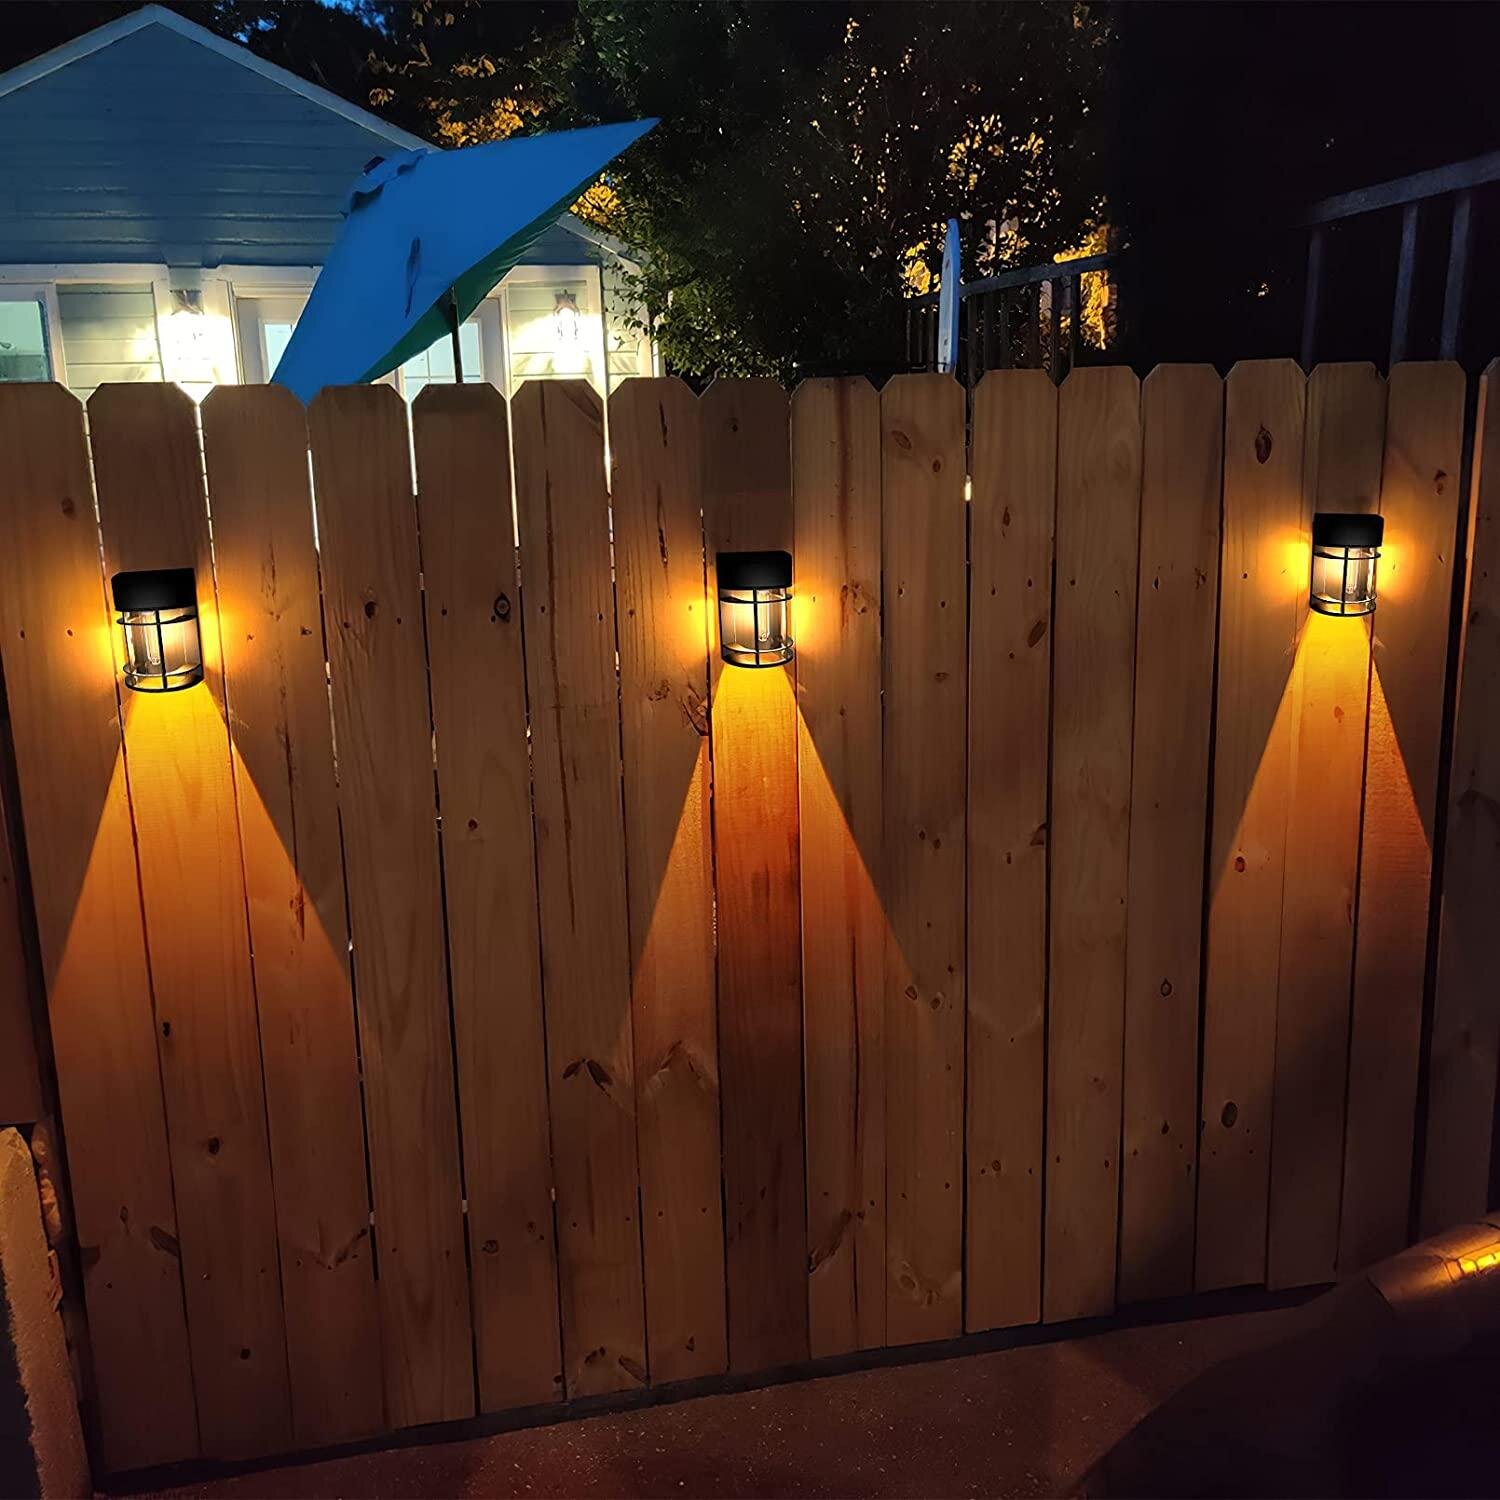 LED solar wall sensor light decks courtyards gardens driveways exterior walls